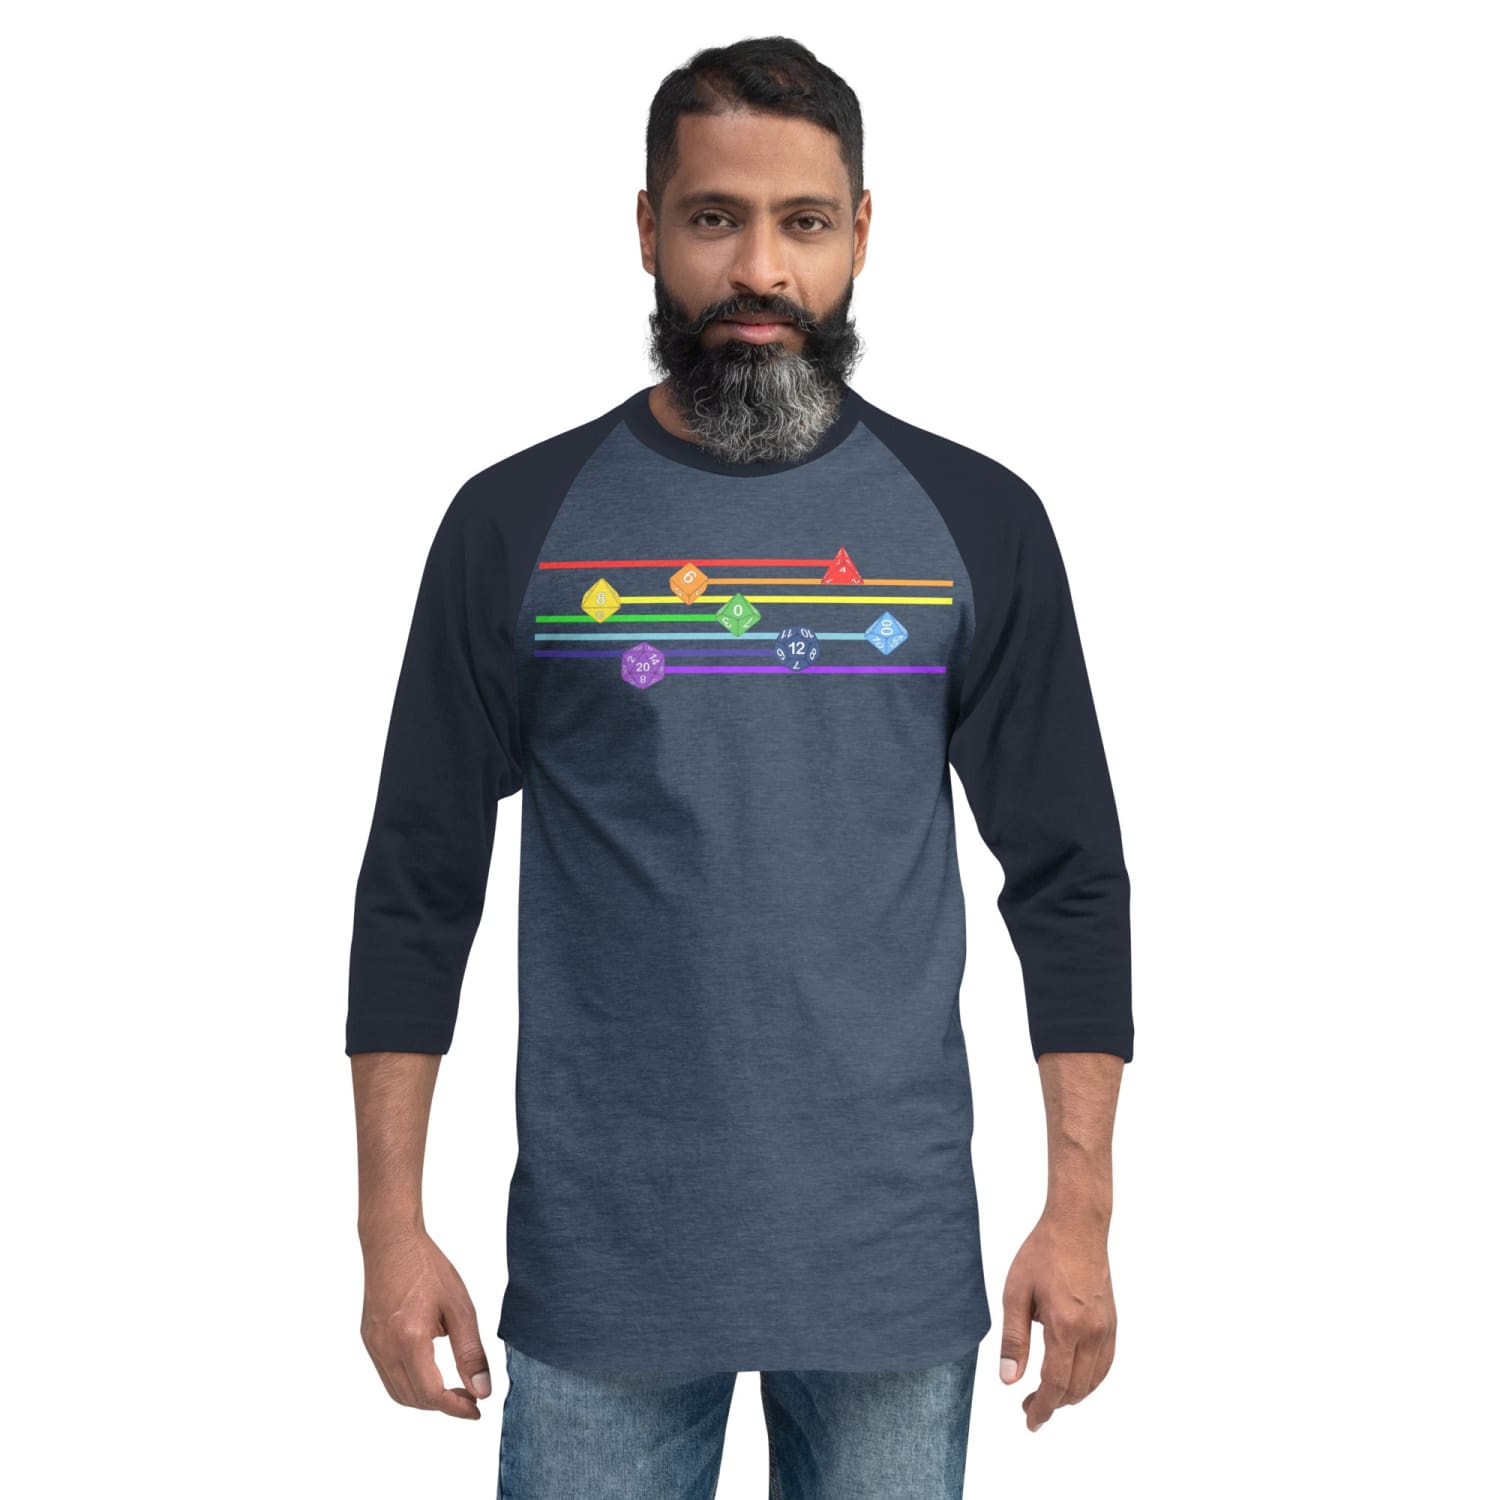 Polyhedral Pride Rainbow Dice Premium 3/4 Sleeve Raglan Shirt - Heather Denim/Navy / XS